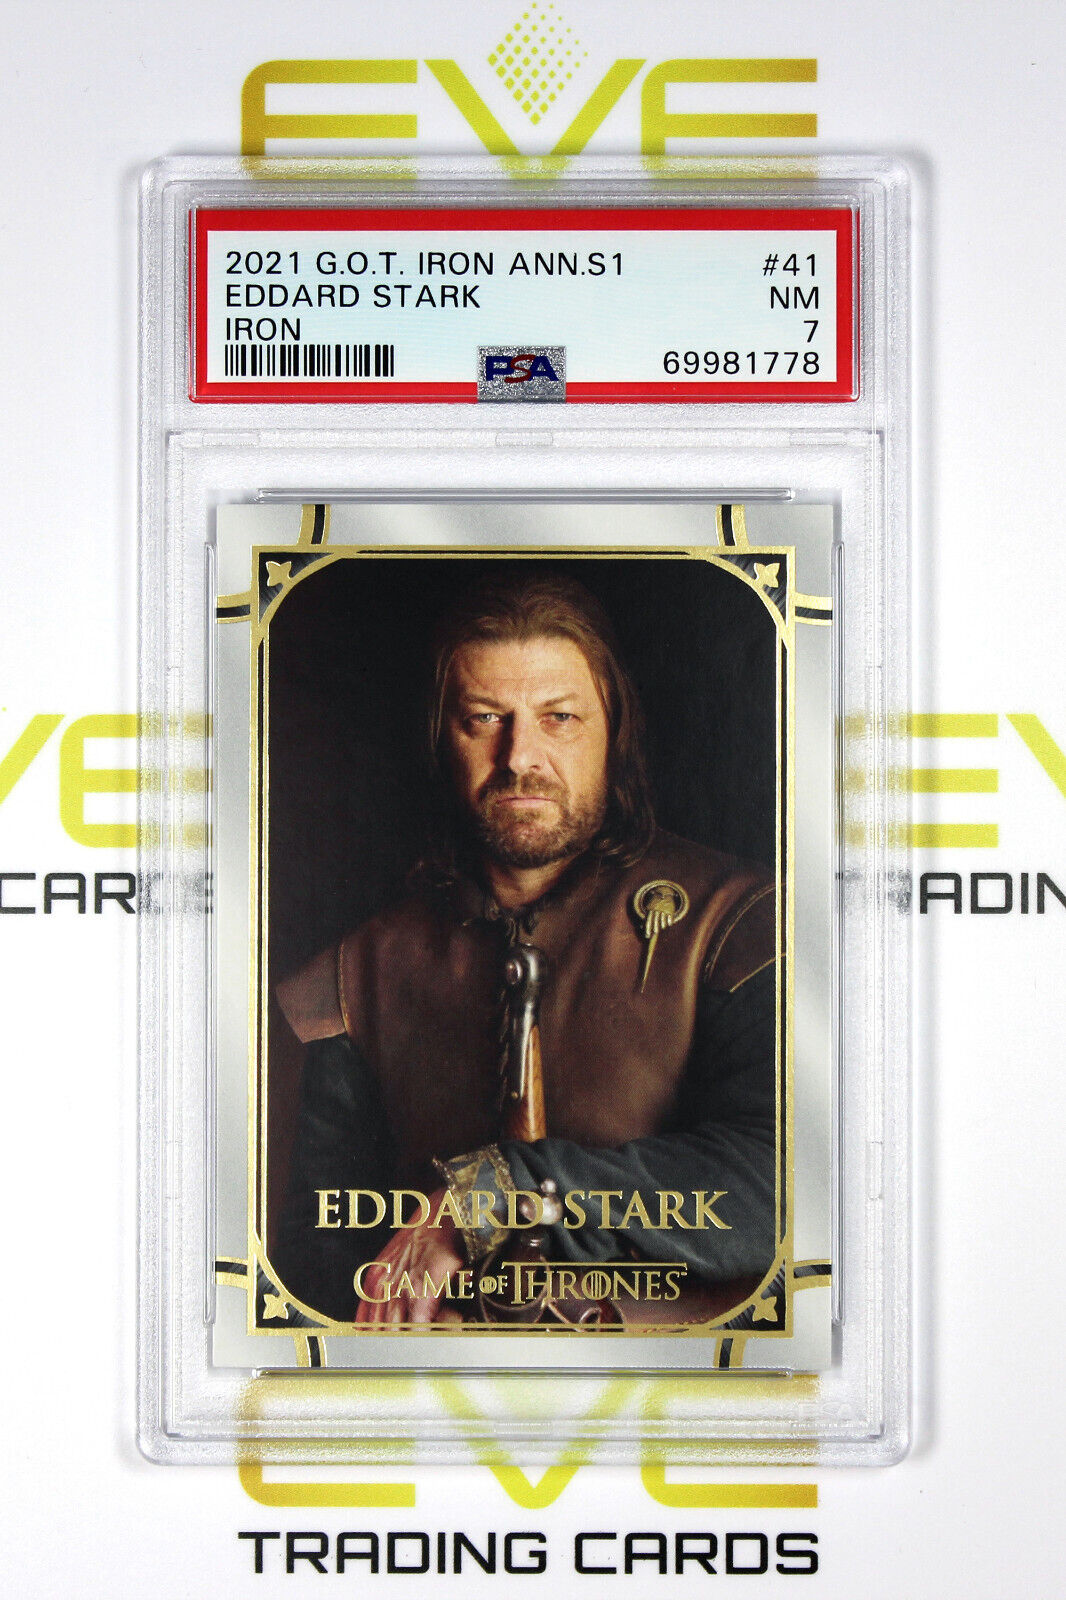 Graded Game of Thrones Card - #41 2021 Eddard Stark - Iron /99 - PSA 7